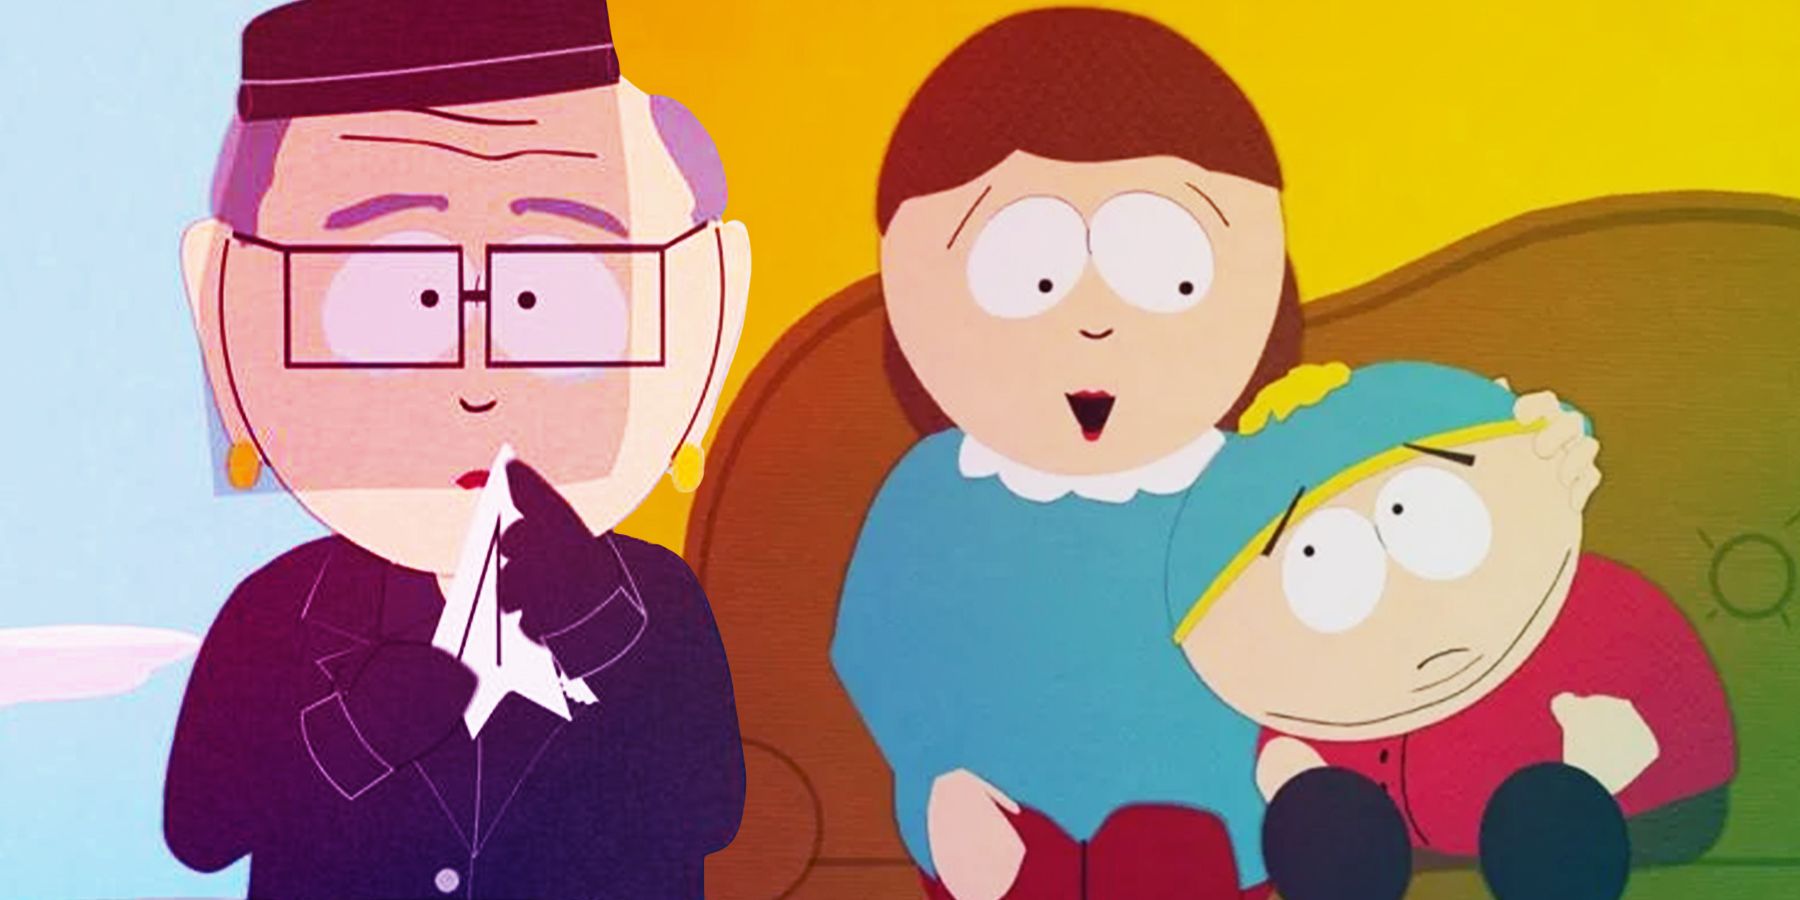 South Park - Satirical Animated TV Show